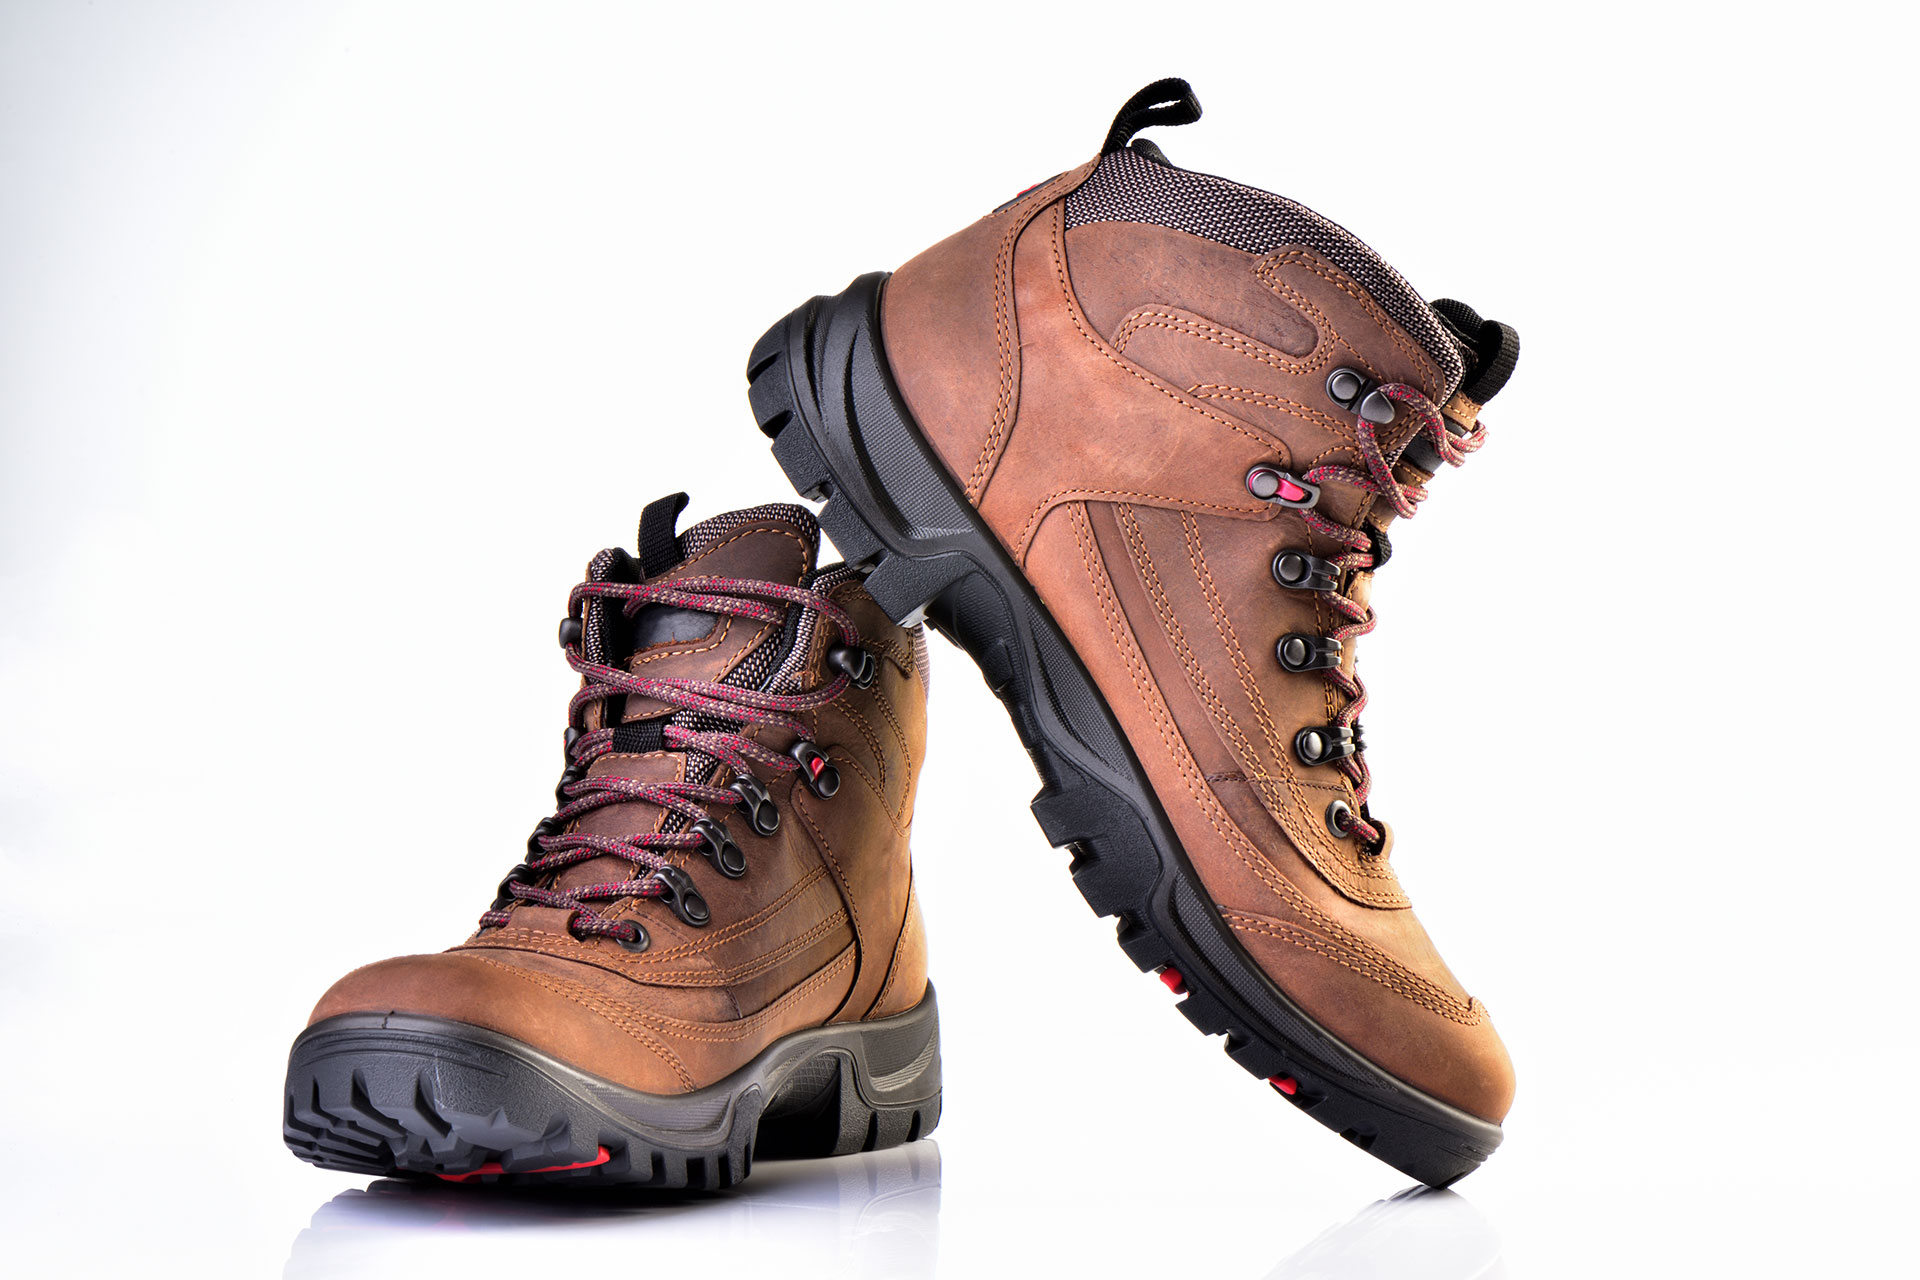 Hiking Boots; Courtesy of TwilightSKY FOTOGRAFiE/Shutterstock.com